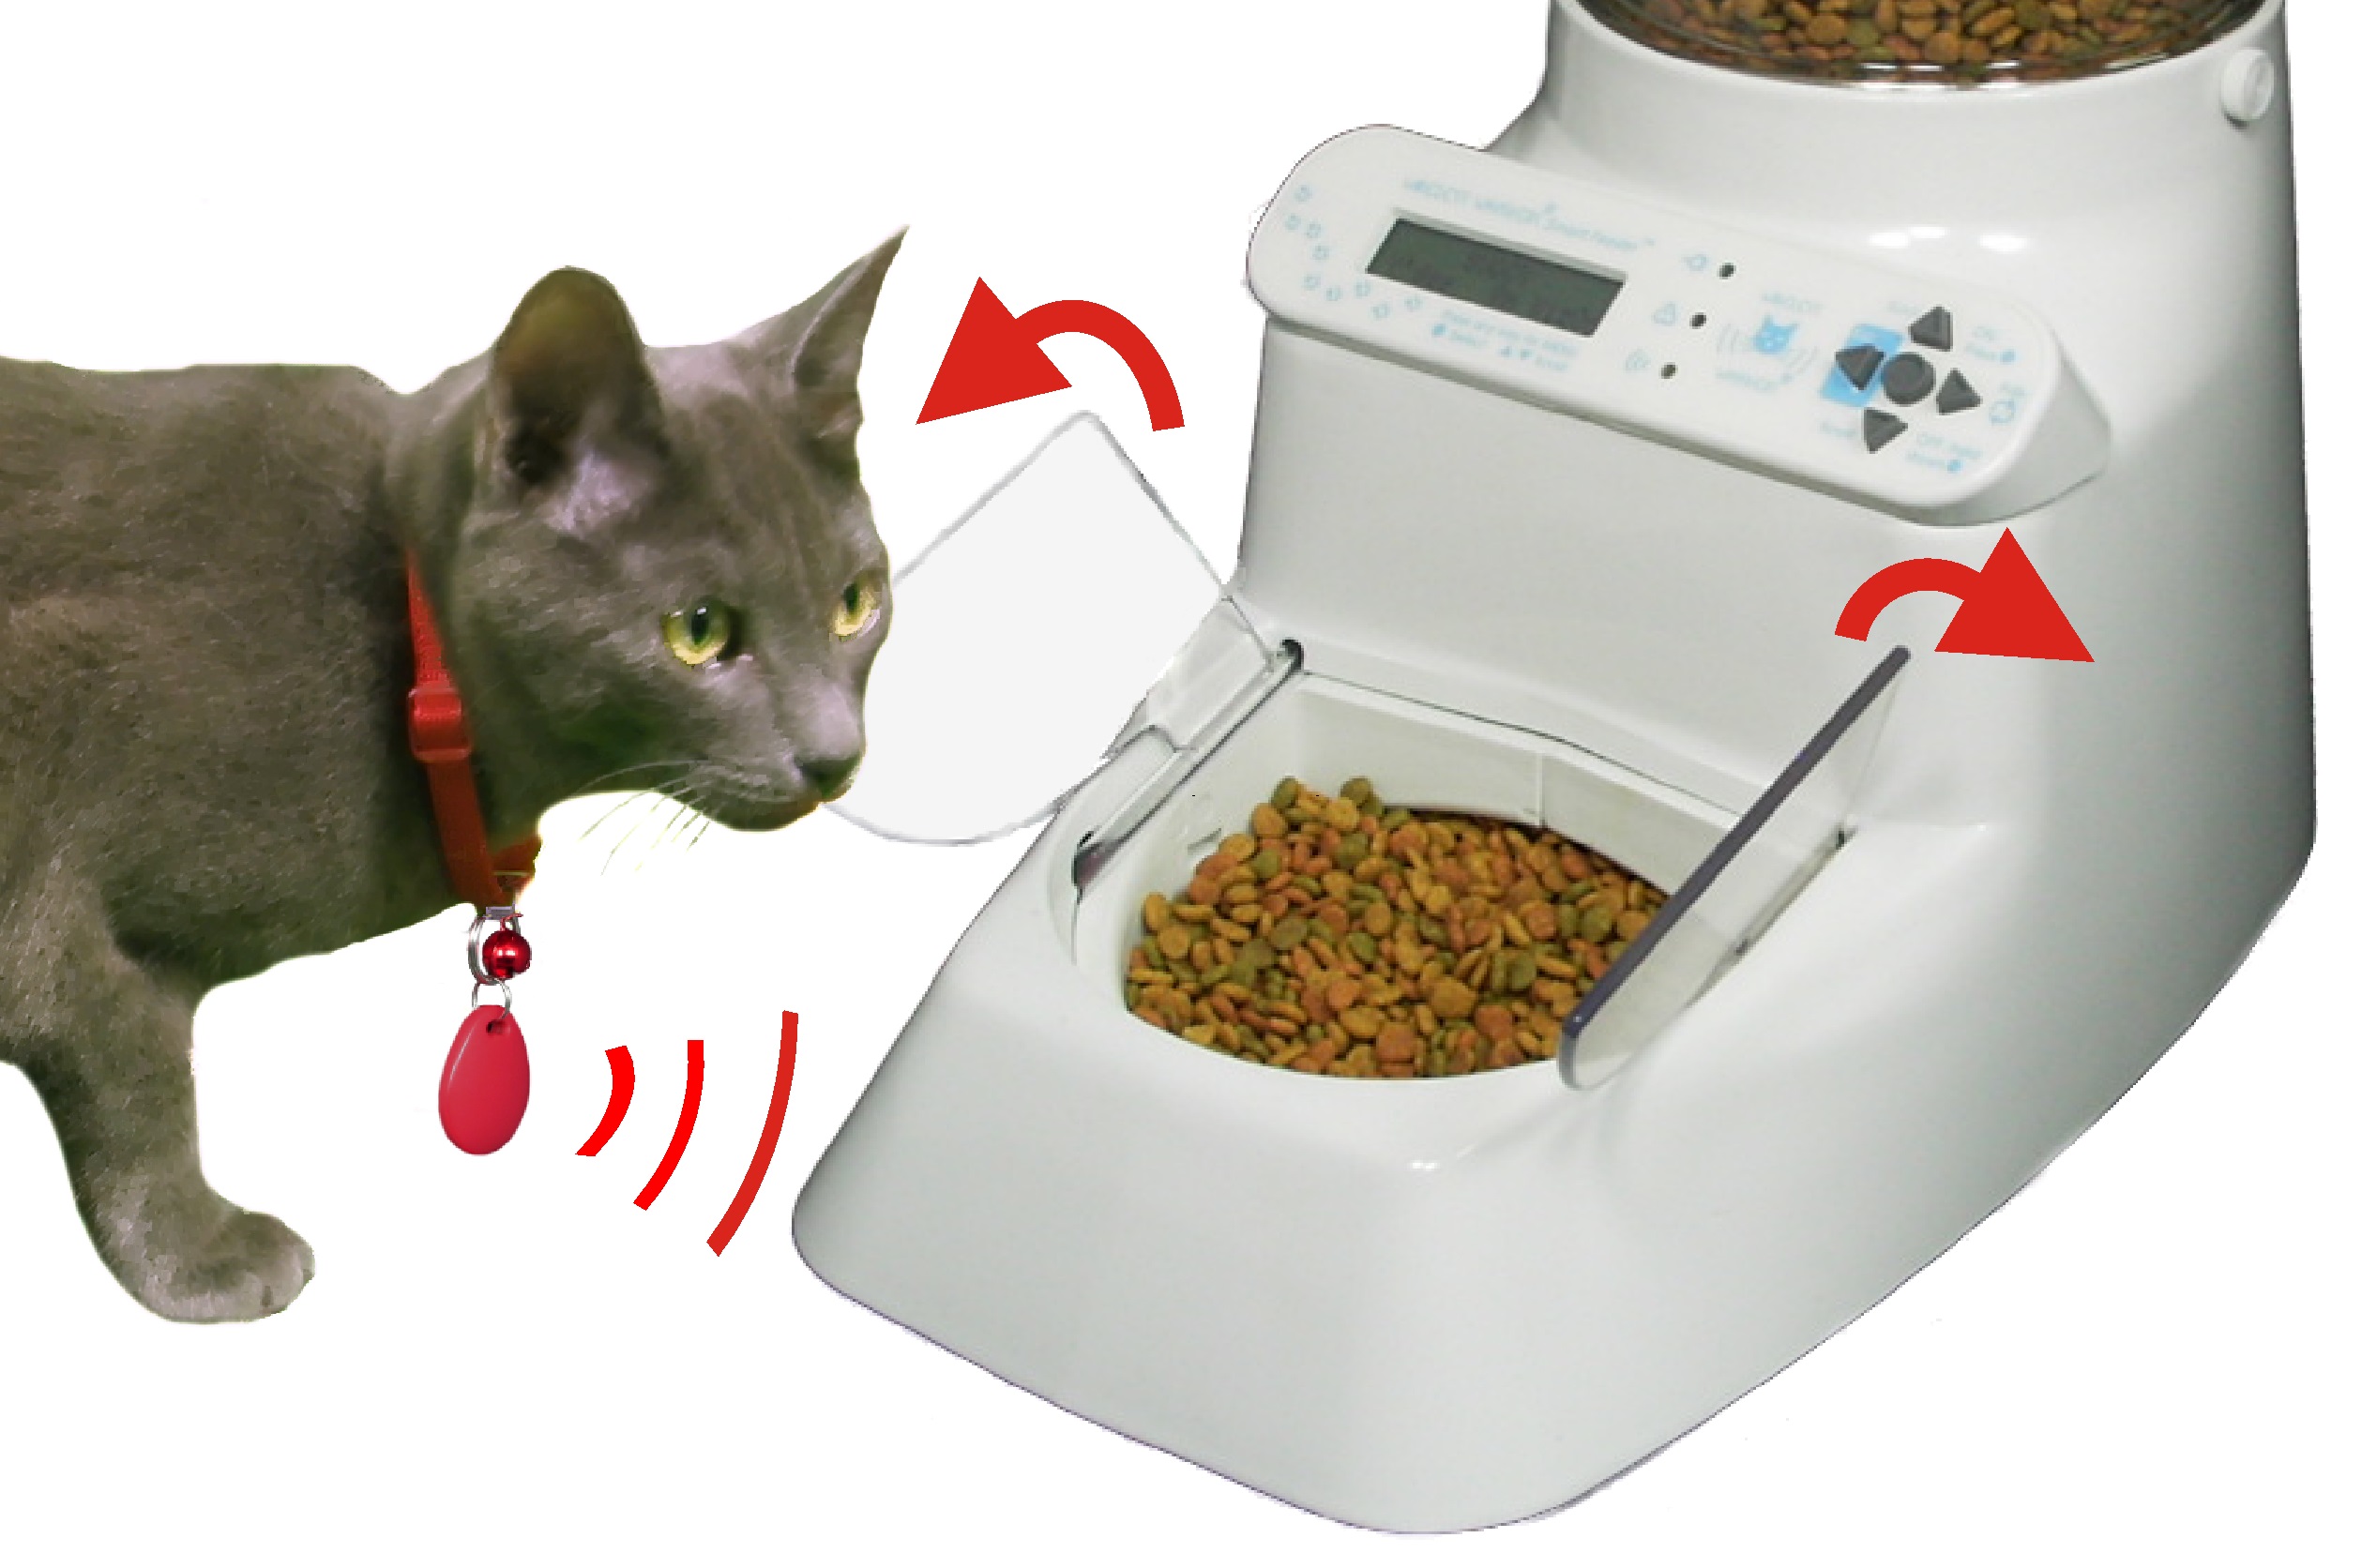 Automatic Pet Feeder, Pet Feeder, Cat Feeder